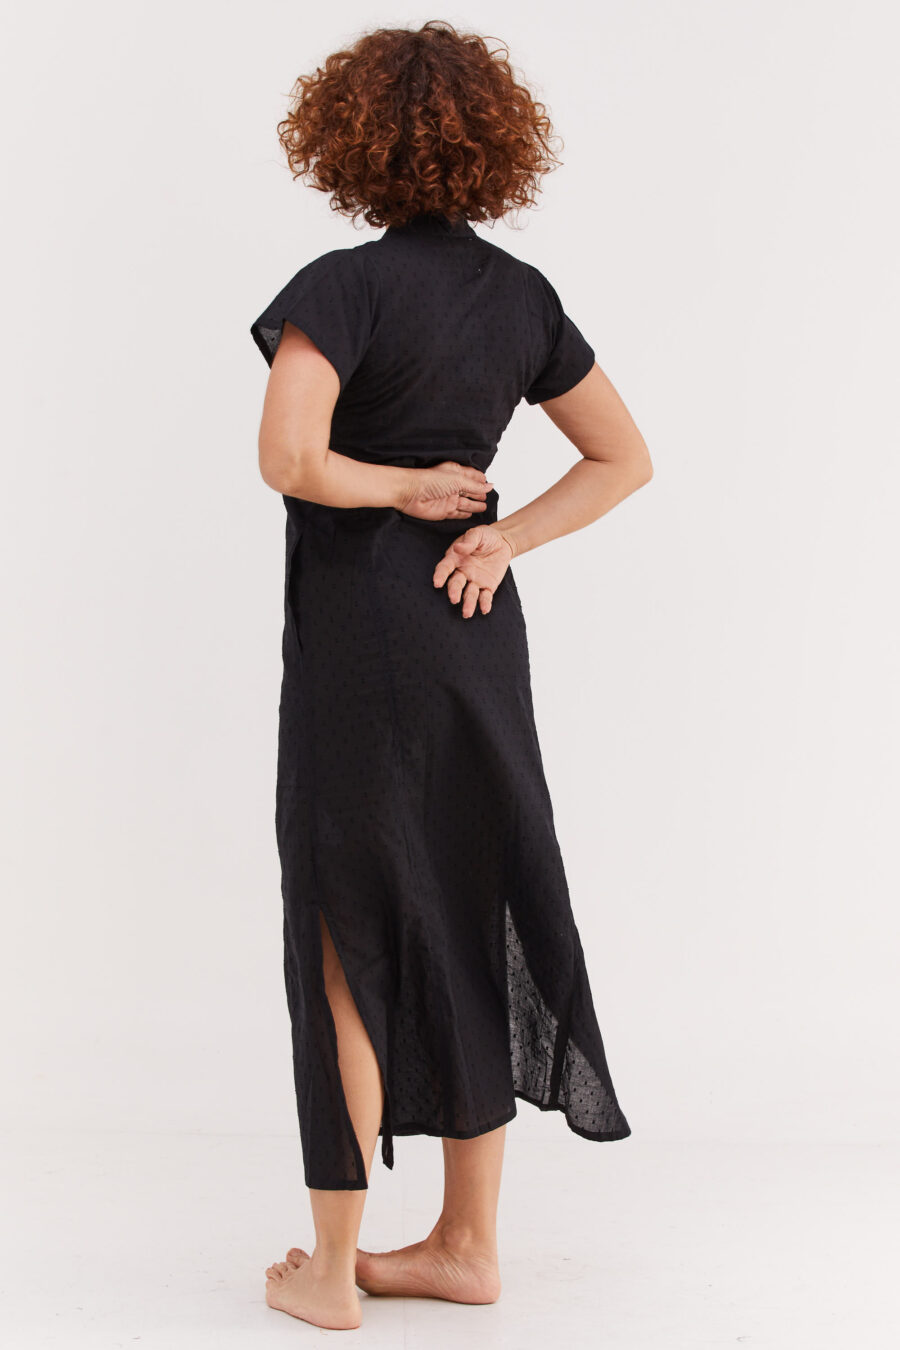 Jalabiya dress | Uniquely designed dress - Black dress with textured black circles